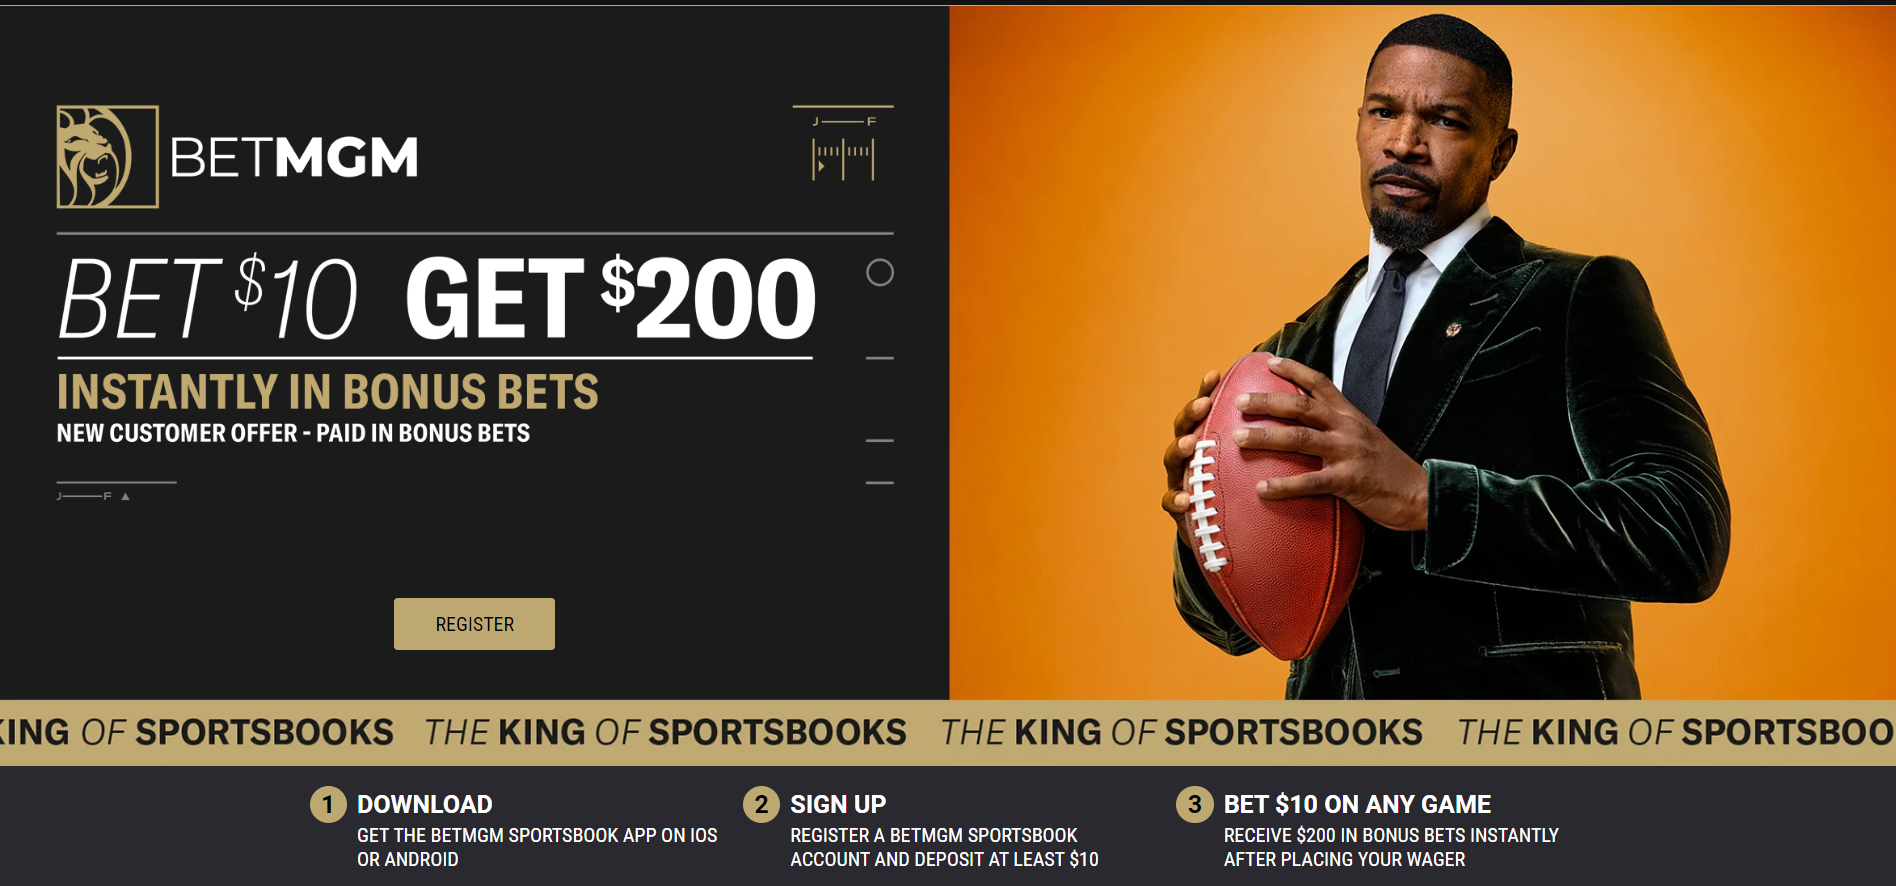 BetMGM Sportsbook Bet $10 Get $200 Bonus Offer